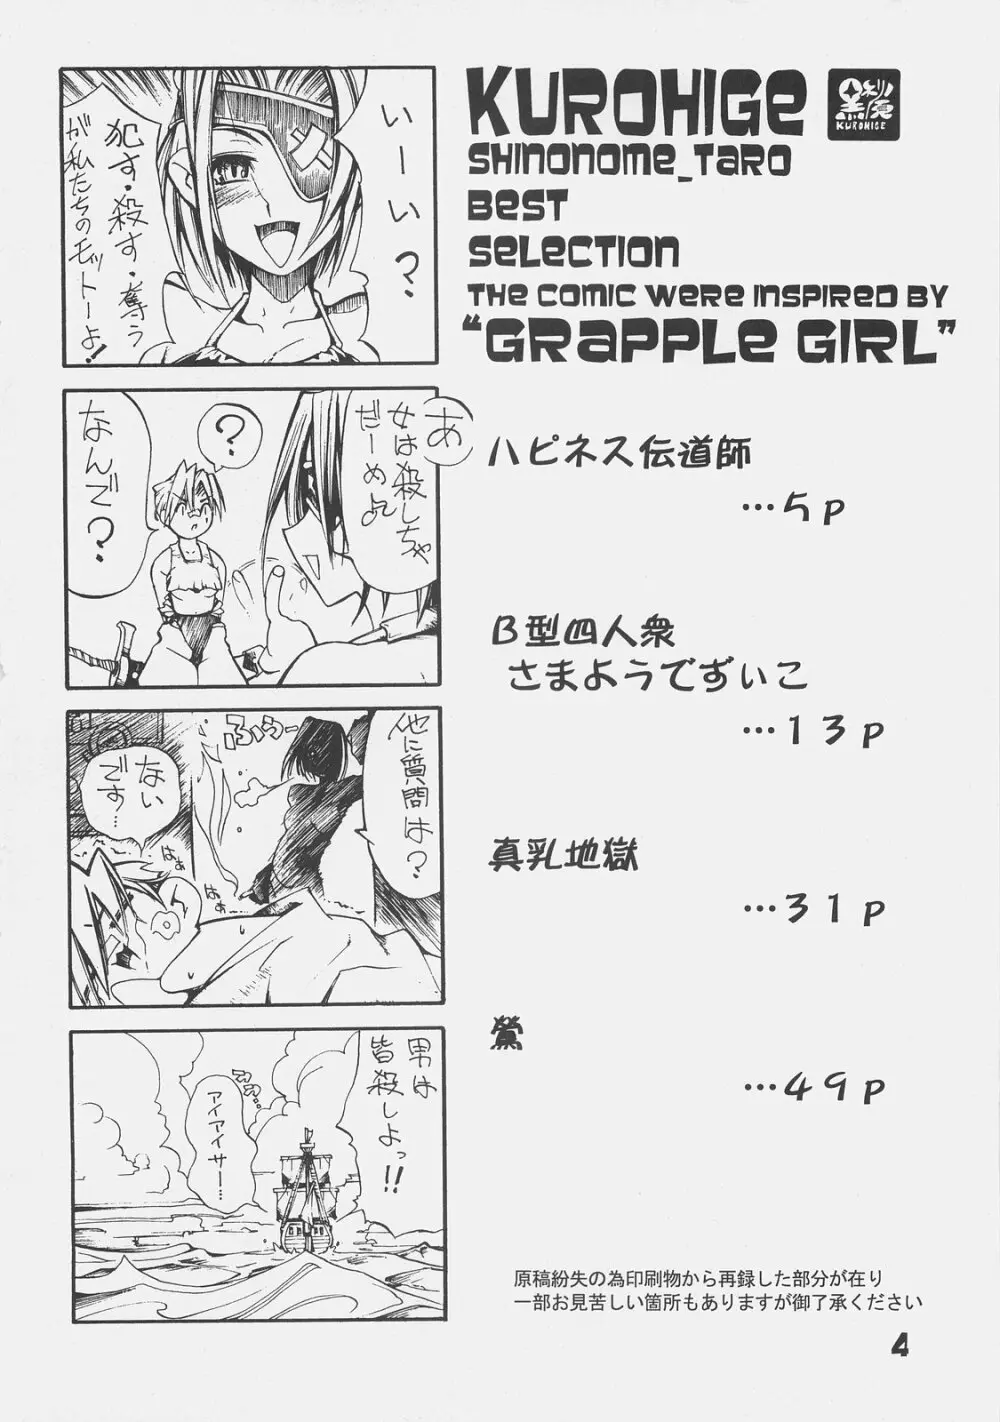 KUROHIGE SHINONOME TARO BEST SELECTION GRAPPLE GIRL 3ページ